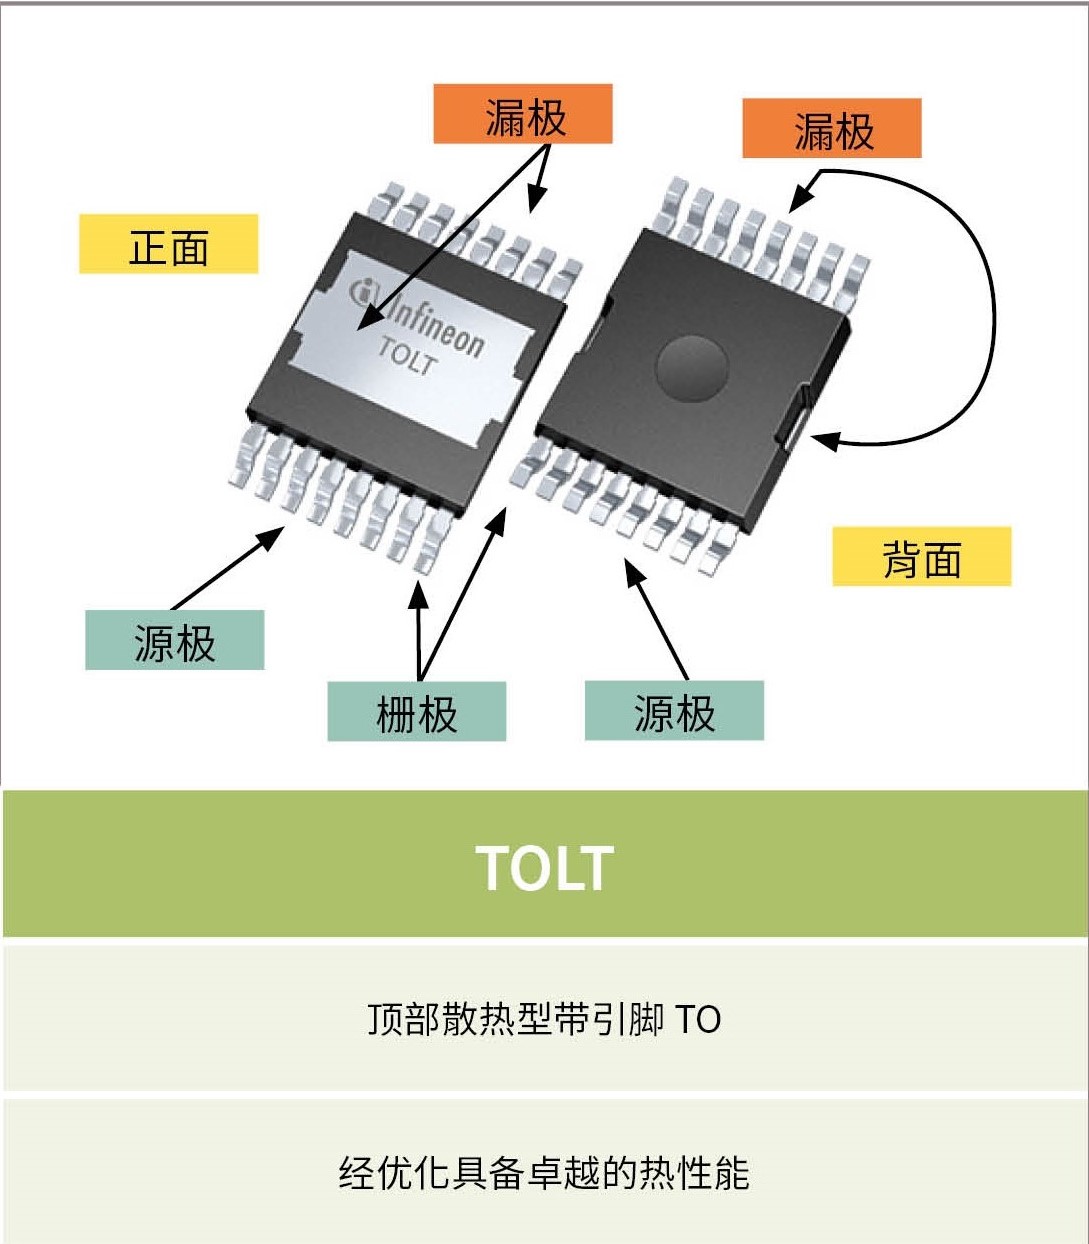 Infineon package TOLT details